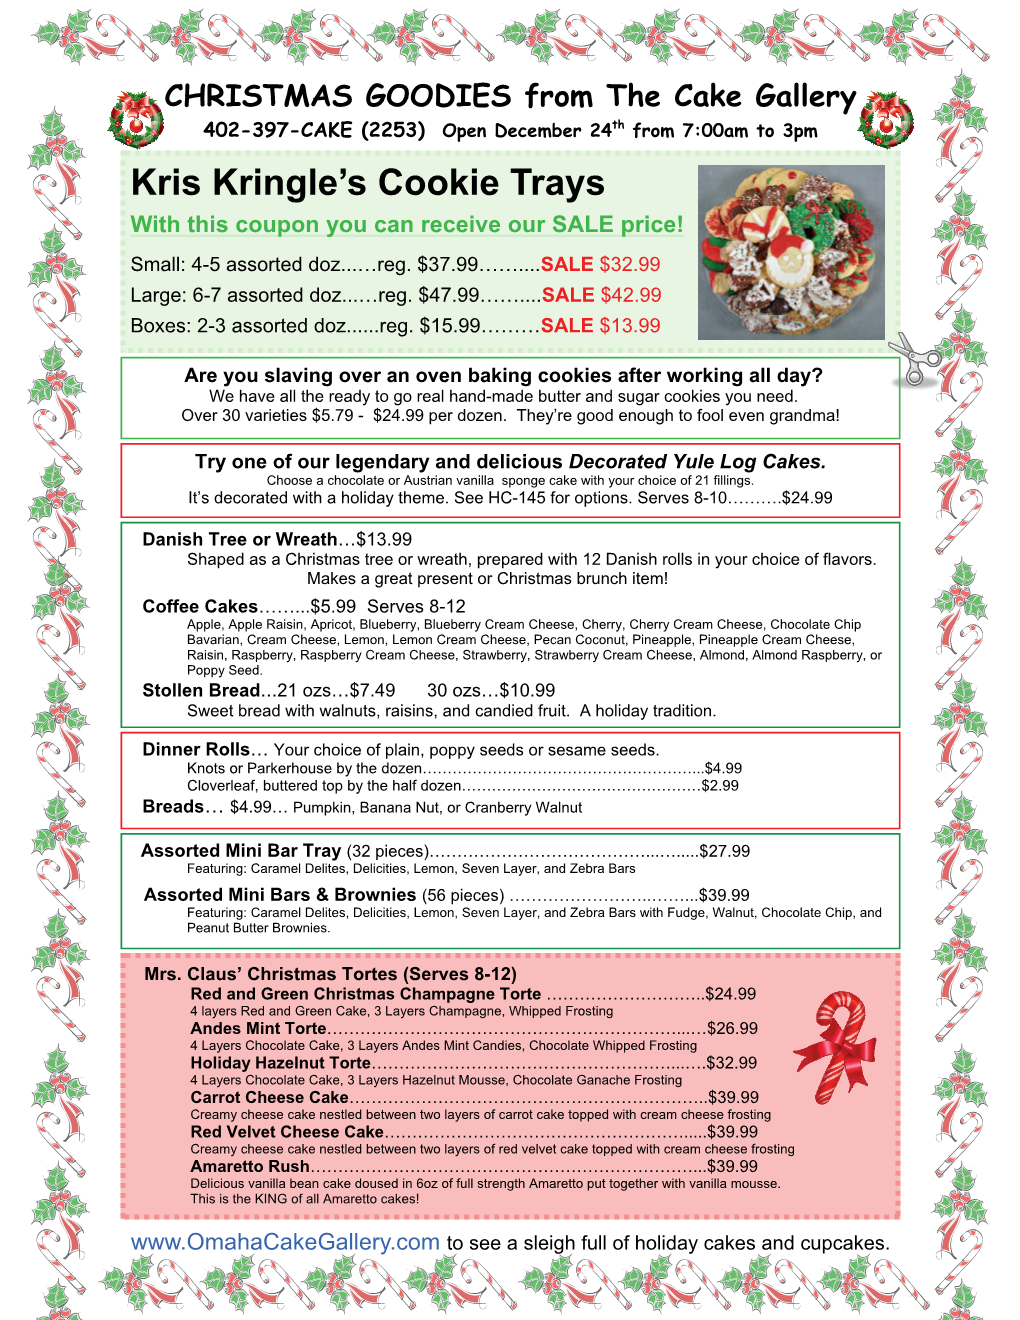 Kris Kringle's Cookie Trays